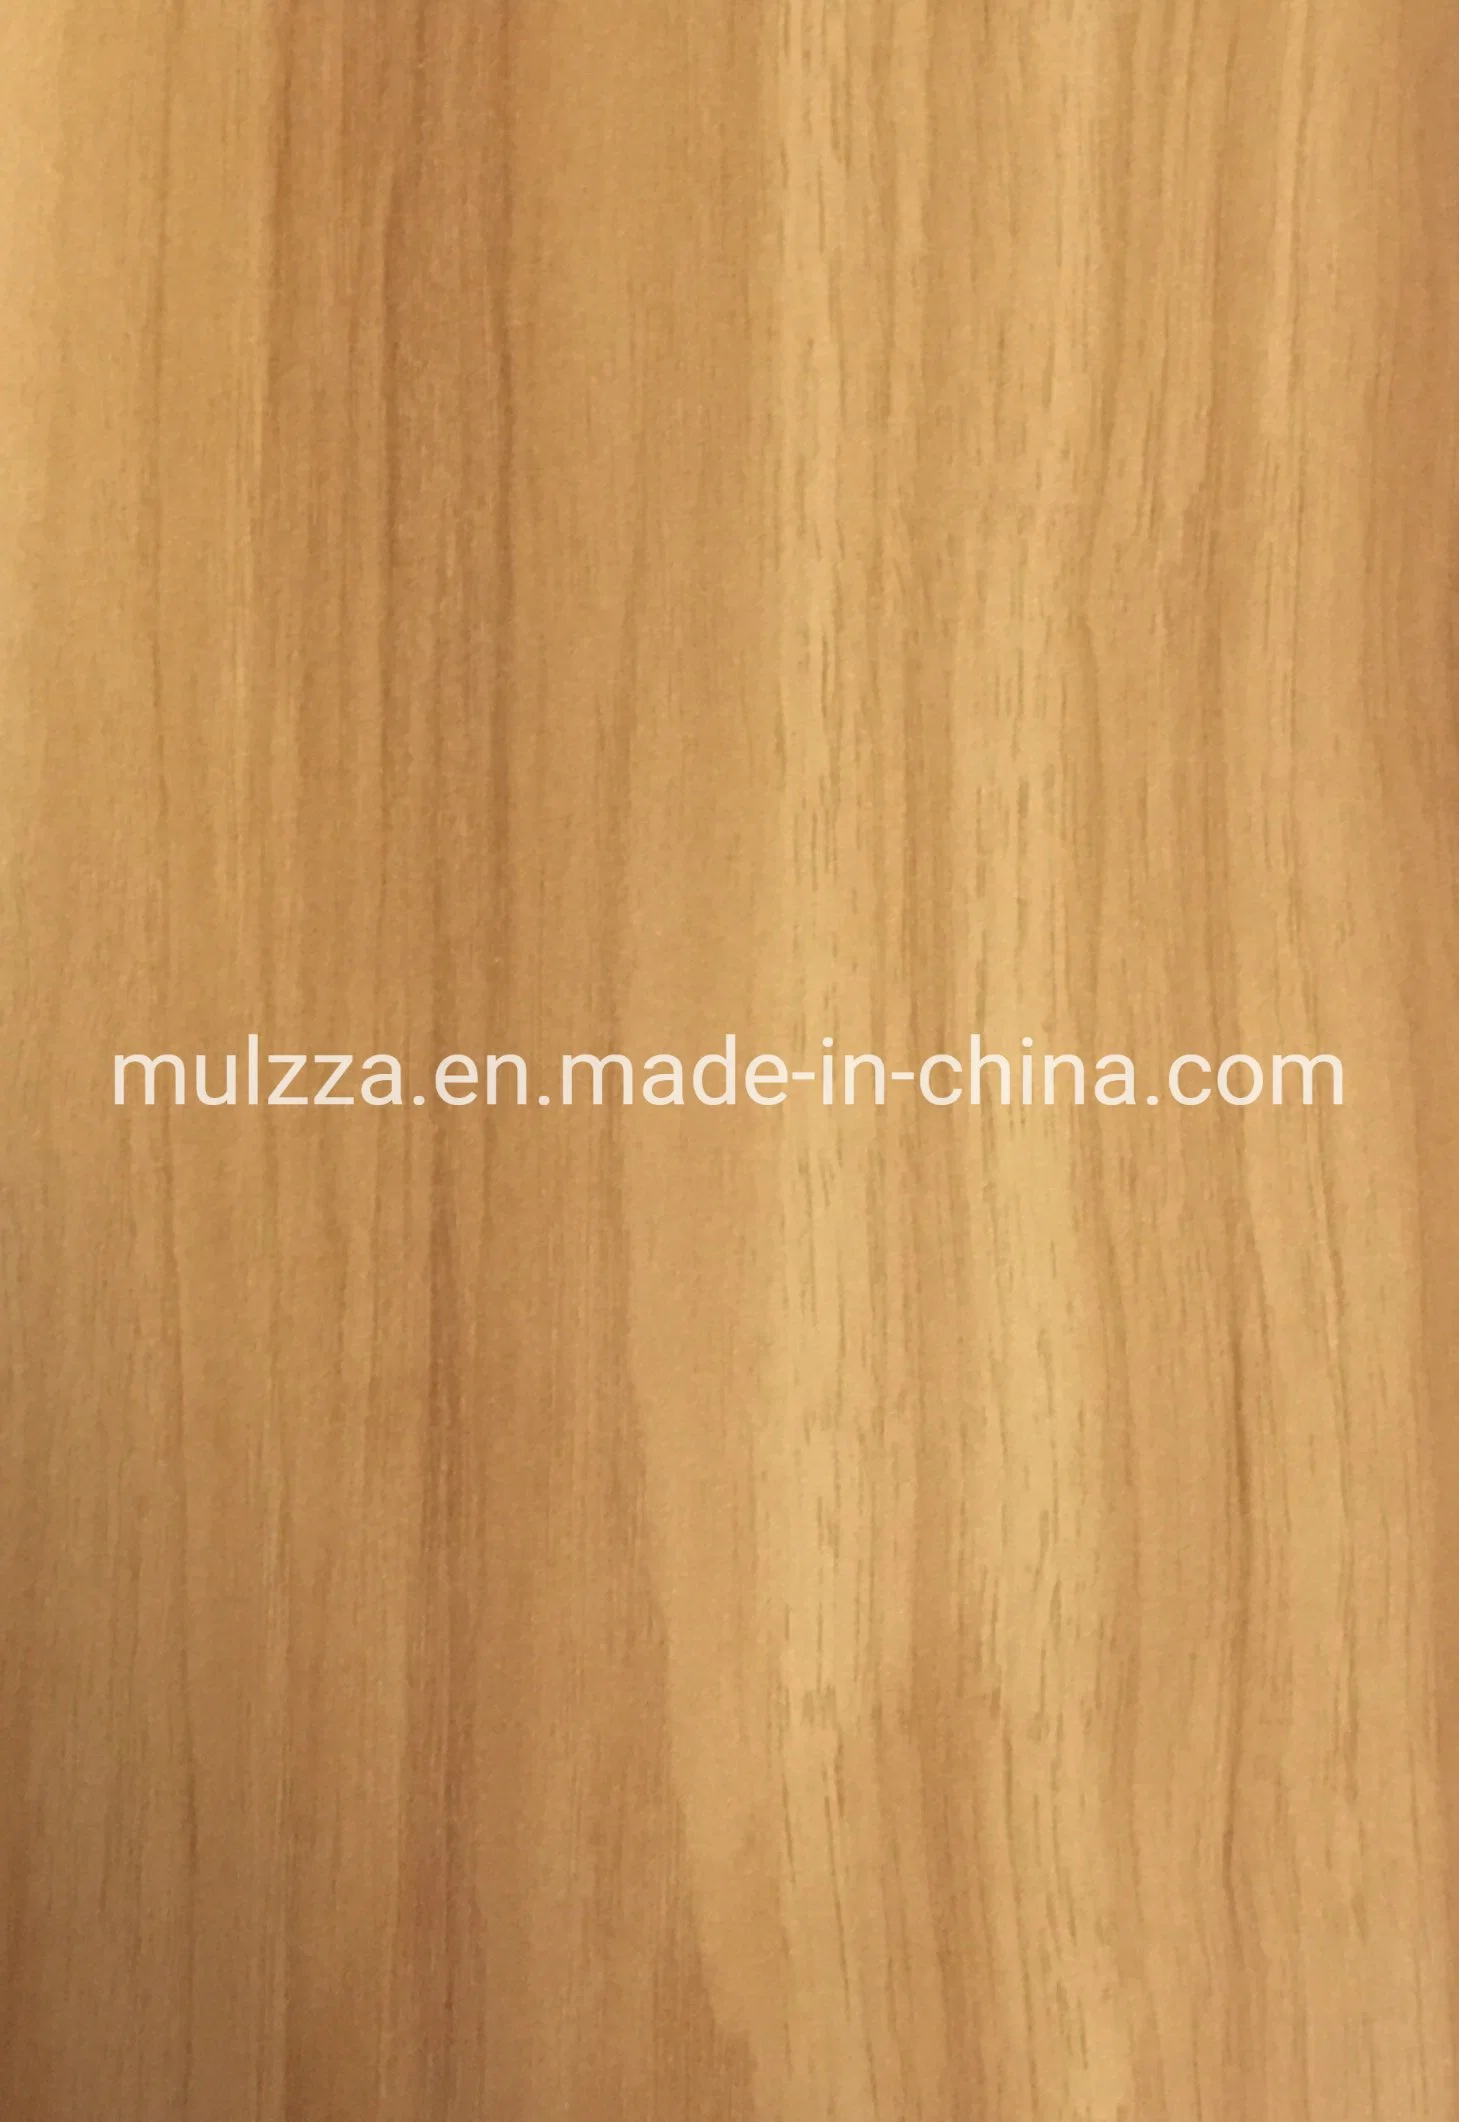 Melamine Impregnated Decorative Wood Grain Paper for Laminating Plywood